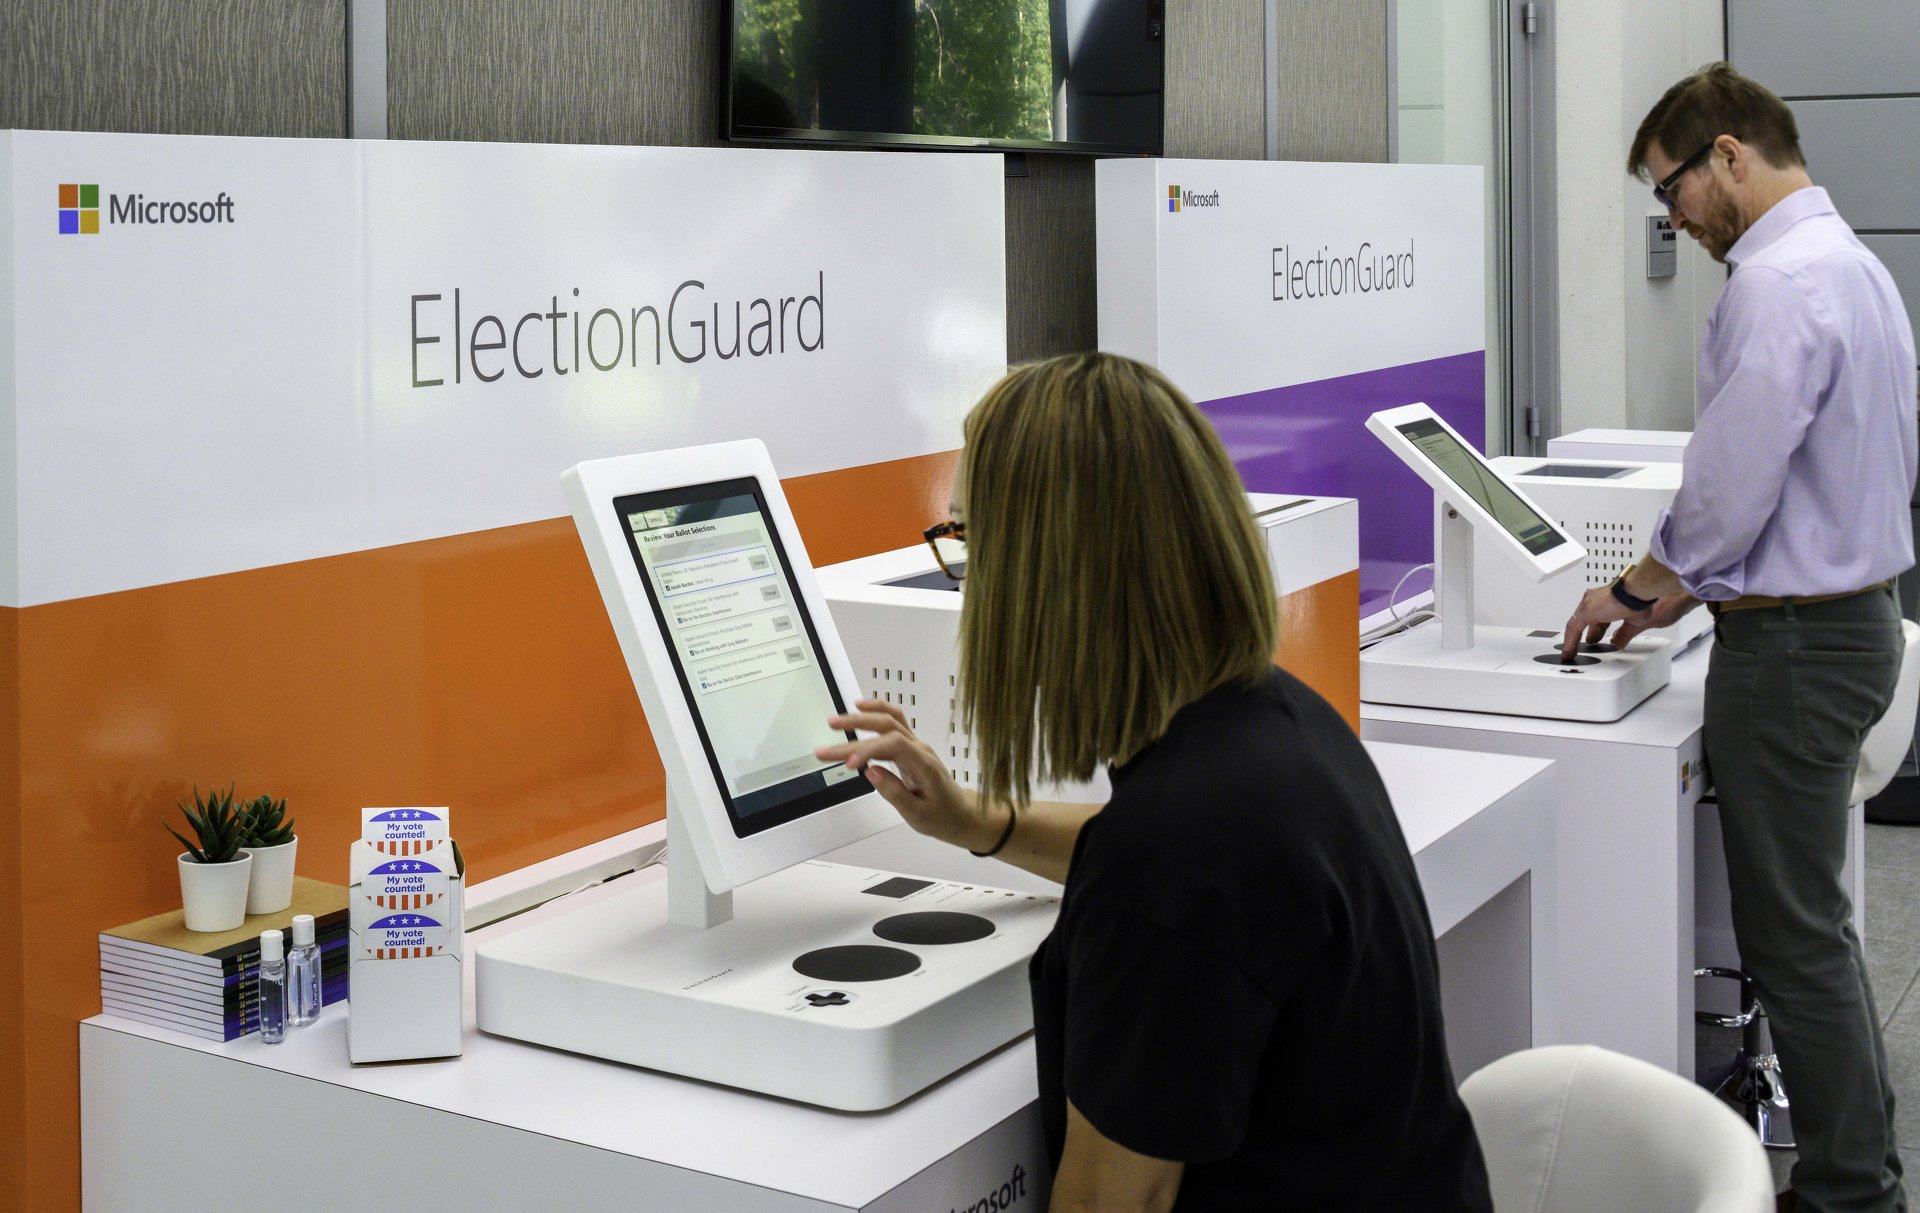 Microsoftの選挙投票システム「ElectionGuard」、ウィスコンシン州で初テスト